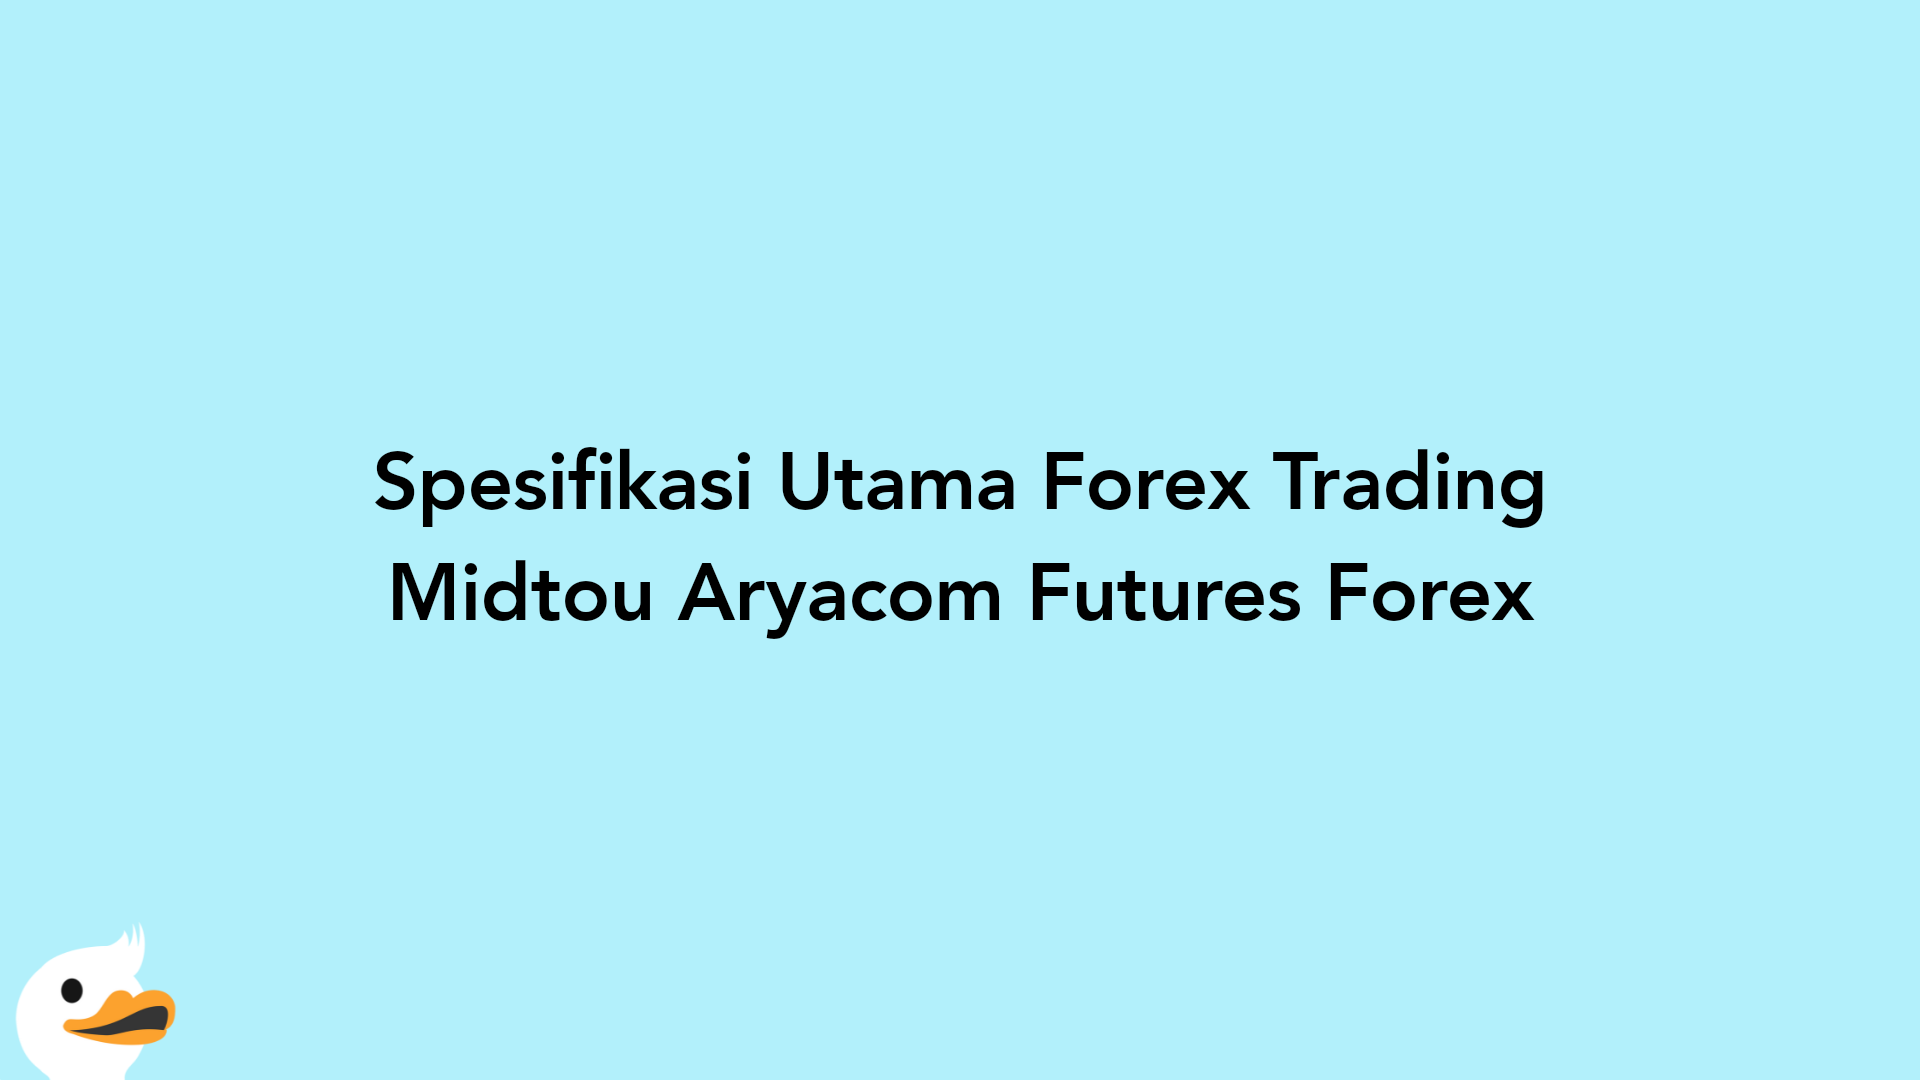 Spesifikasi Utama Forex Trading Midtou Aryacom Futures Forex